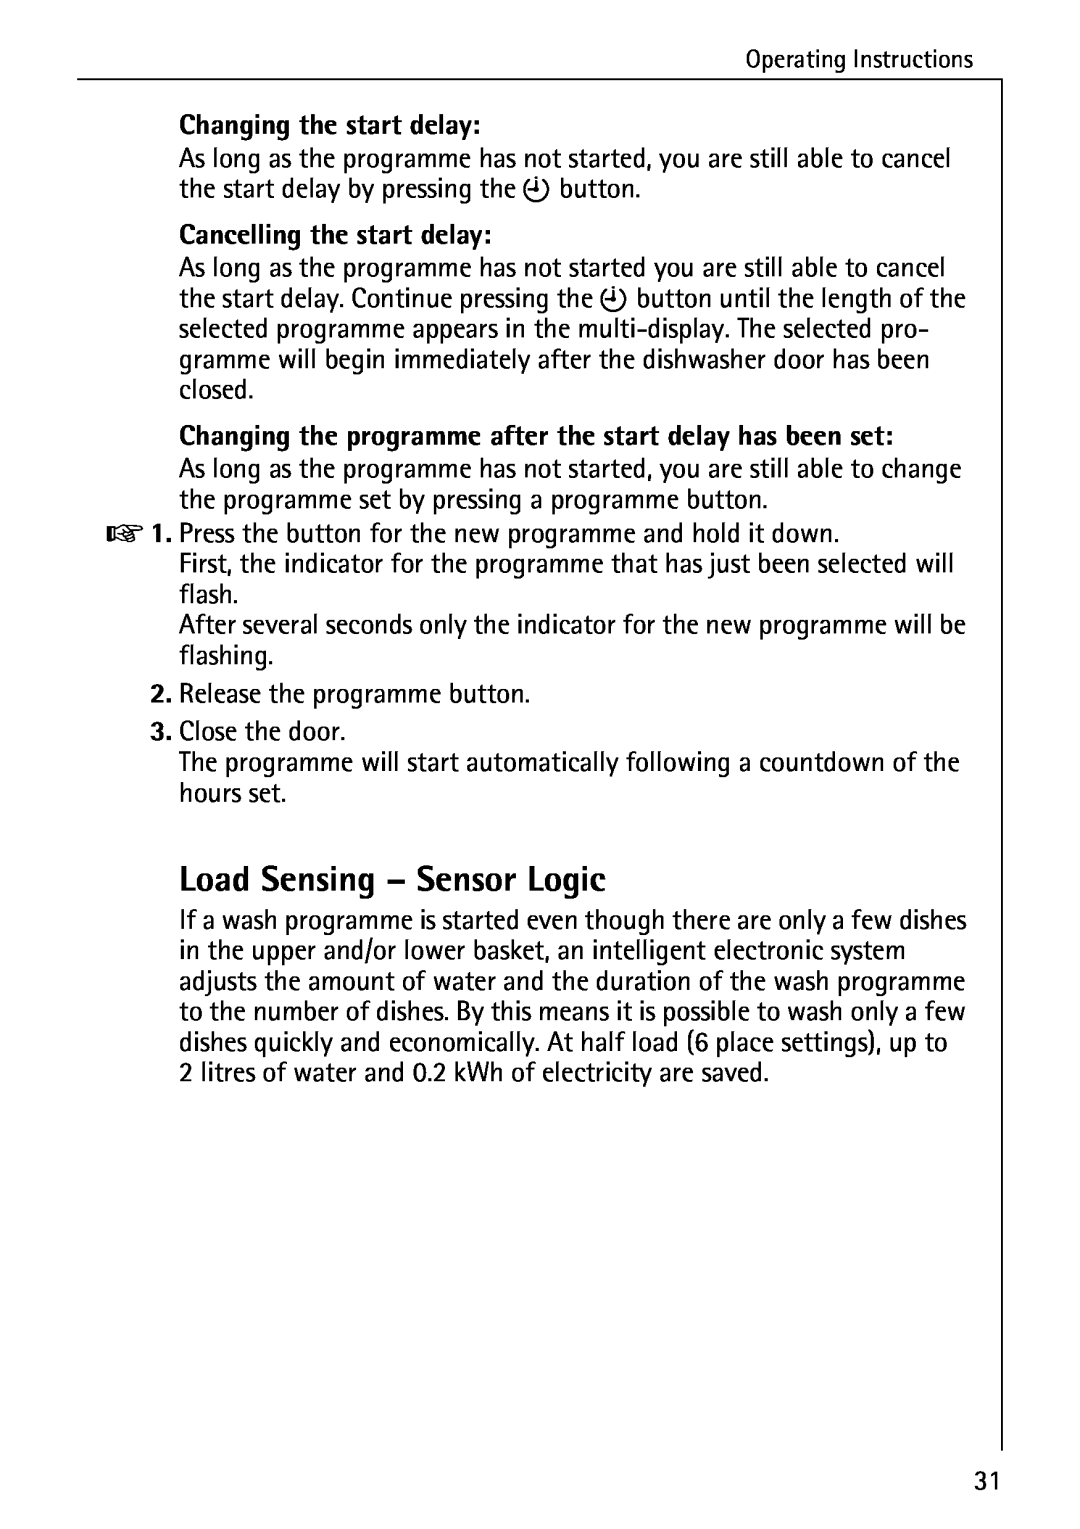 Electrolux 85050 VI manual Load Sensing - Sensor Logic, Changing the start delay, Cancelling the start delay 